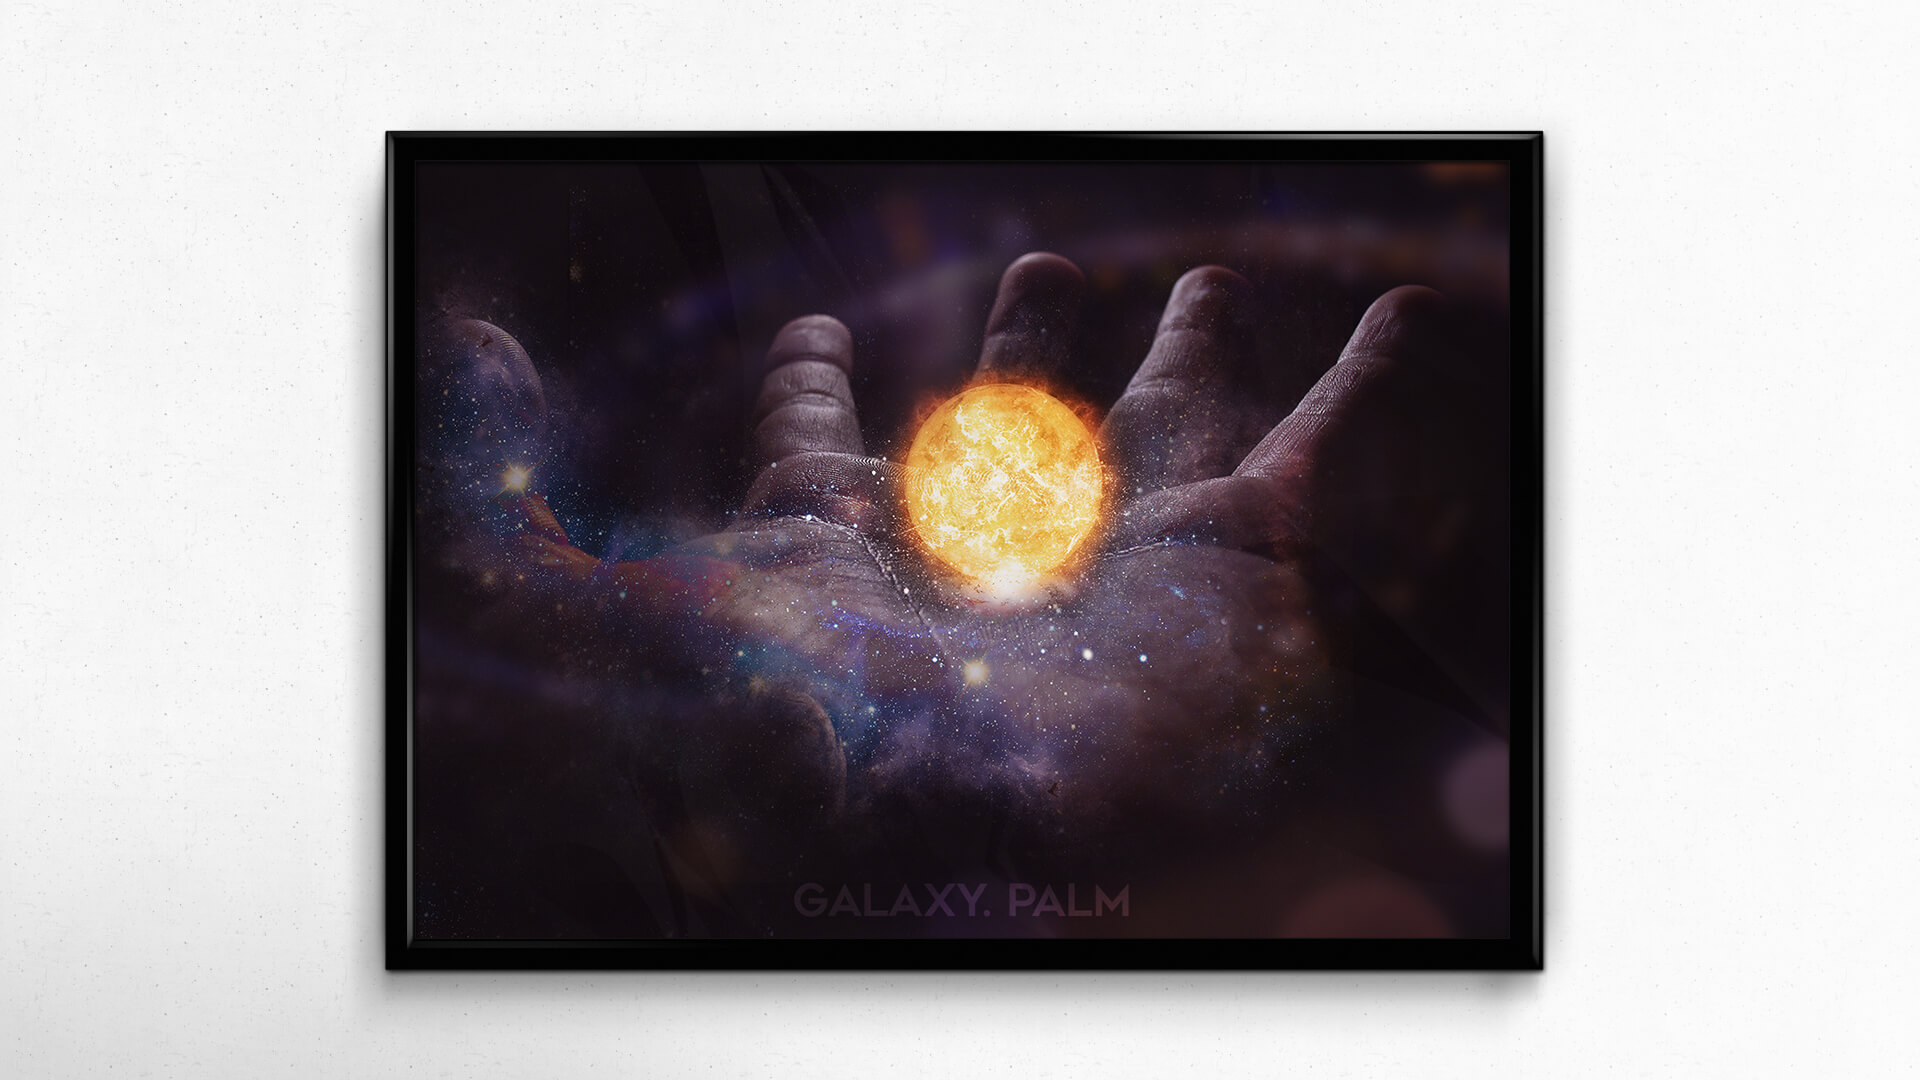 GalaxyPalm Mockup Poster